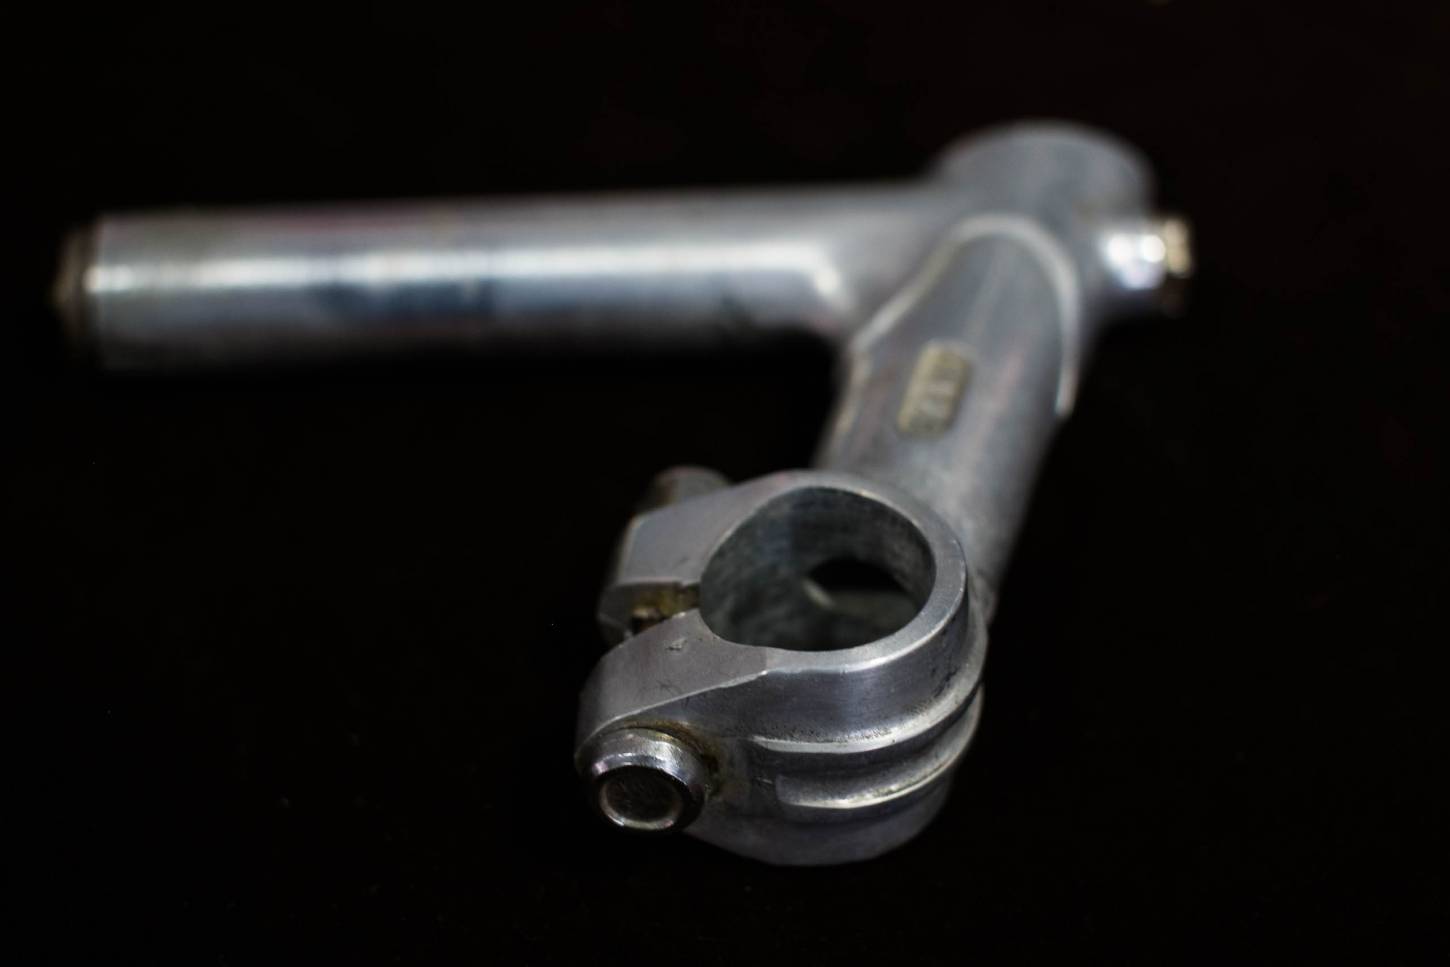 Pivo No. 75 stem stem 25.0 clamp 80 mm throat depth 22.0 mm diameter Vintage Road Bike